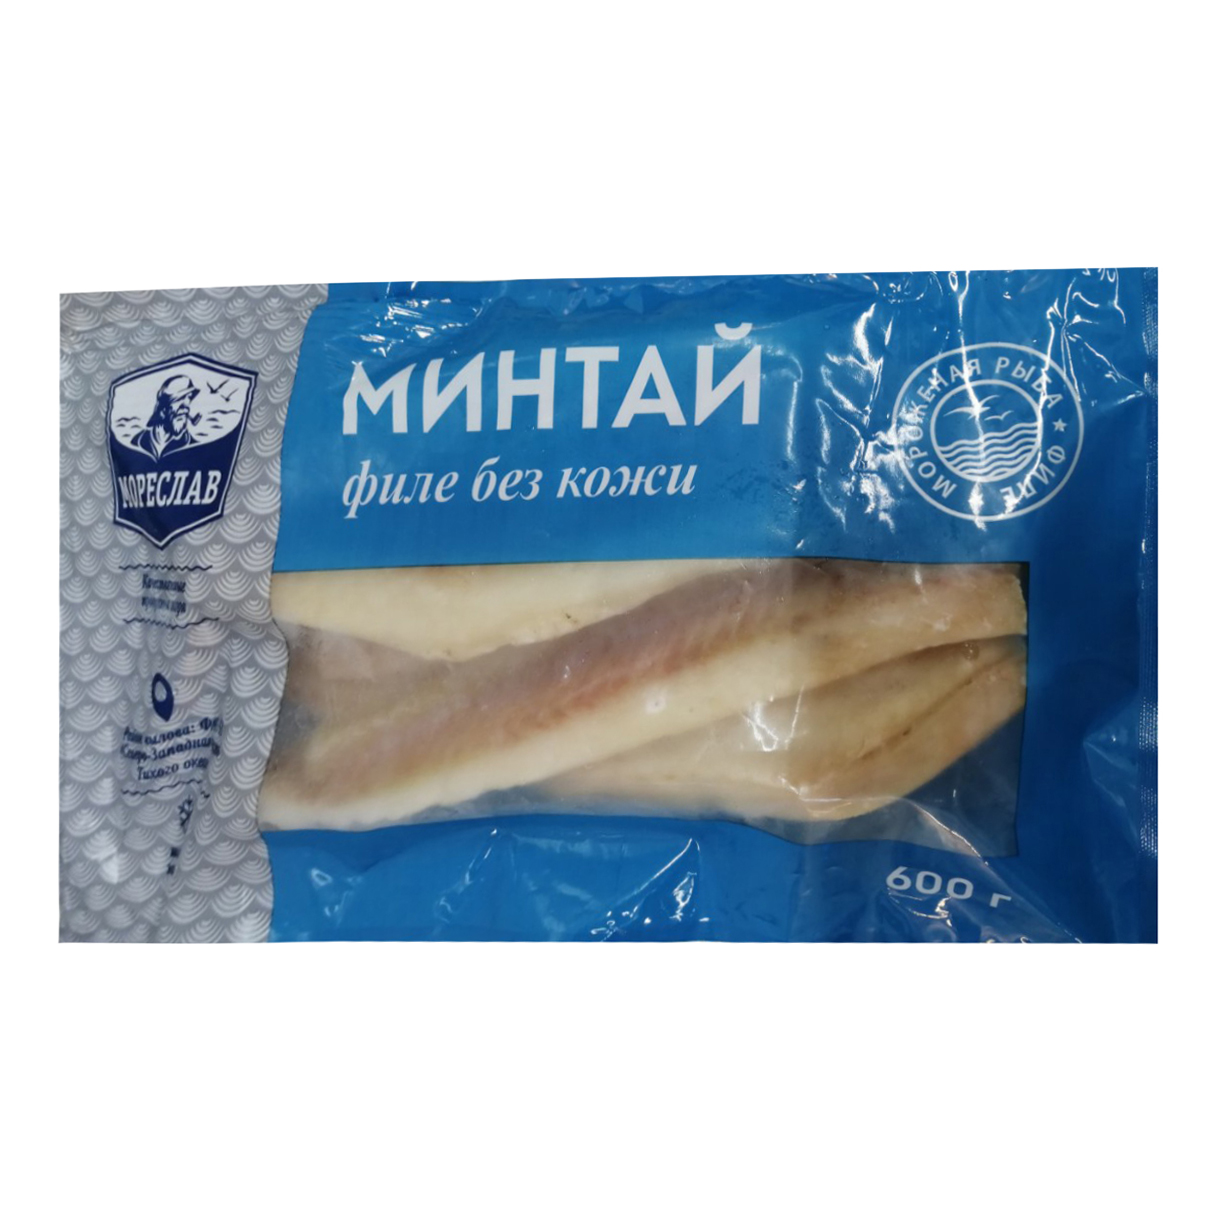 Минтай Мореслав замороженный филе 600 г